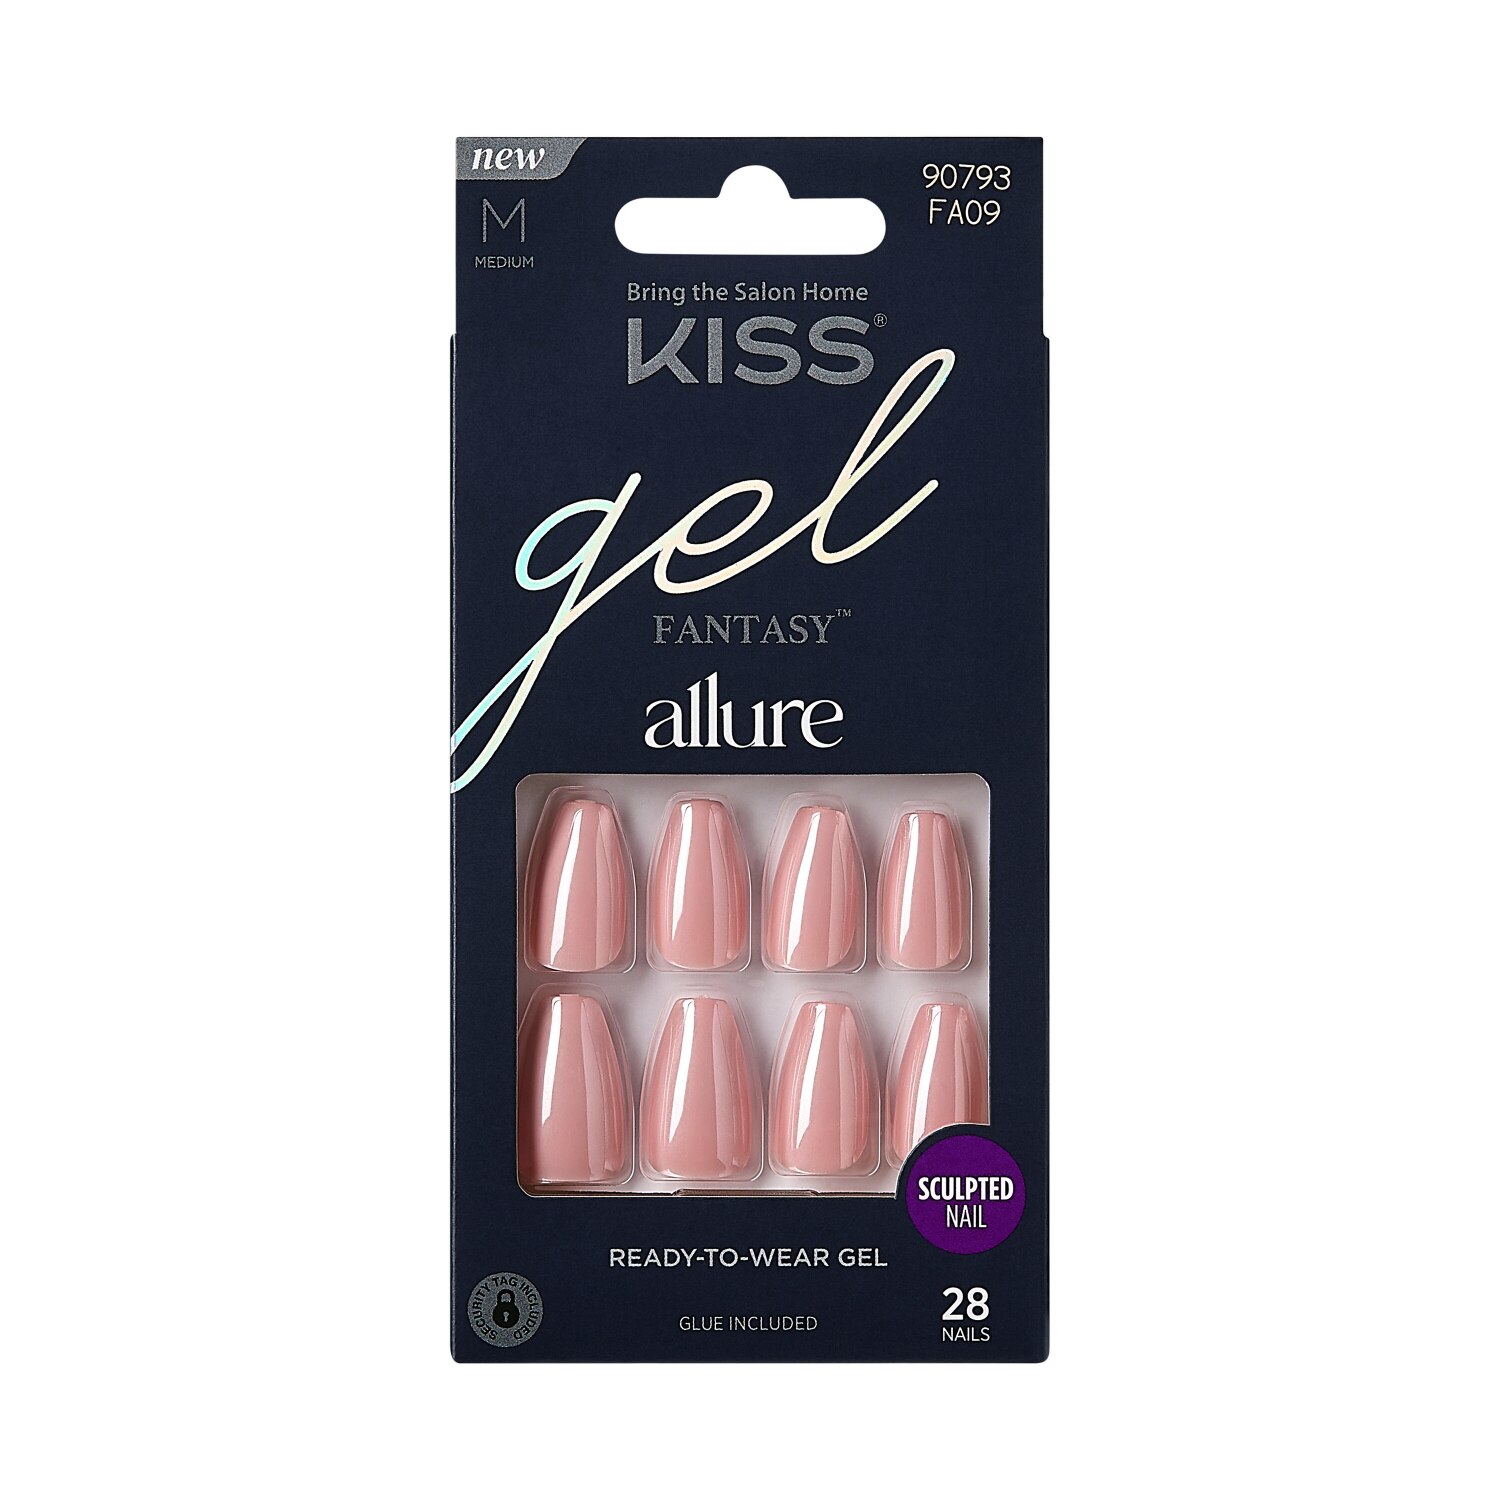 KISS Gel Fantasy Allure Press-On Nails, Pink, Medium, Coffin Shape, 31 Ct. , CVS